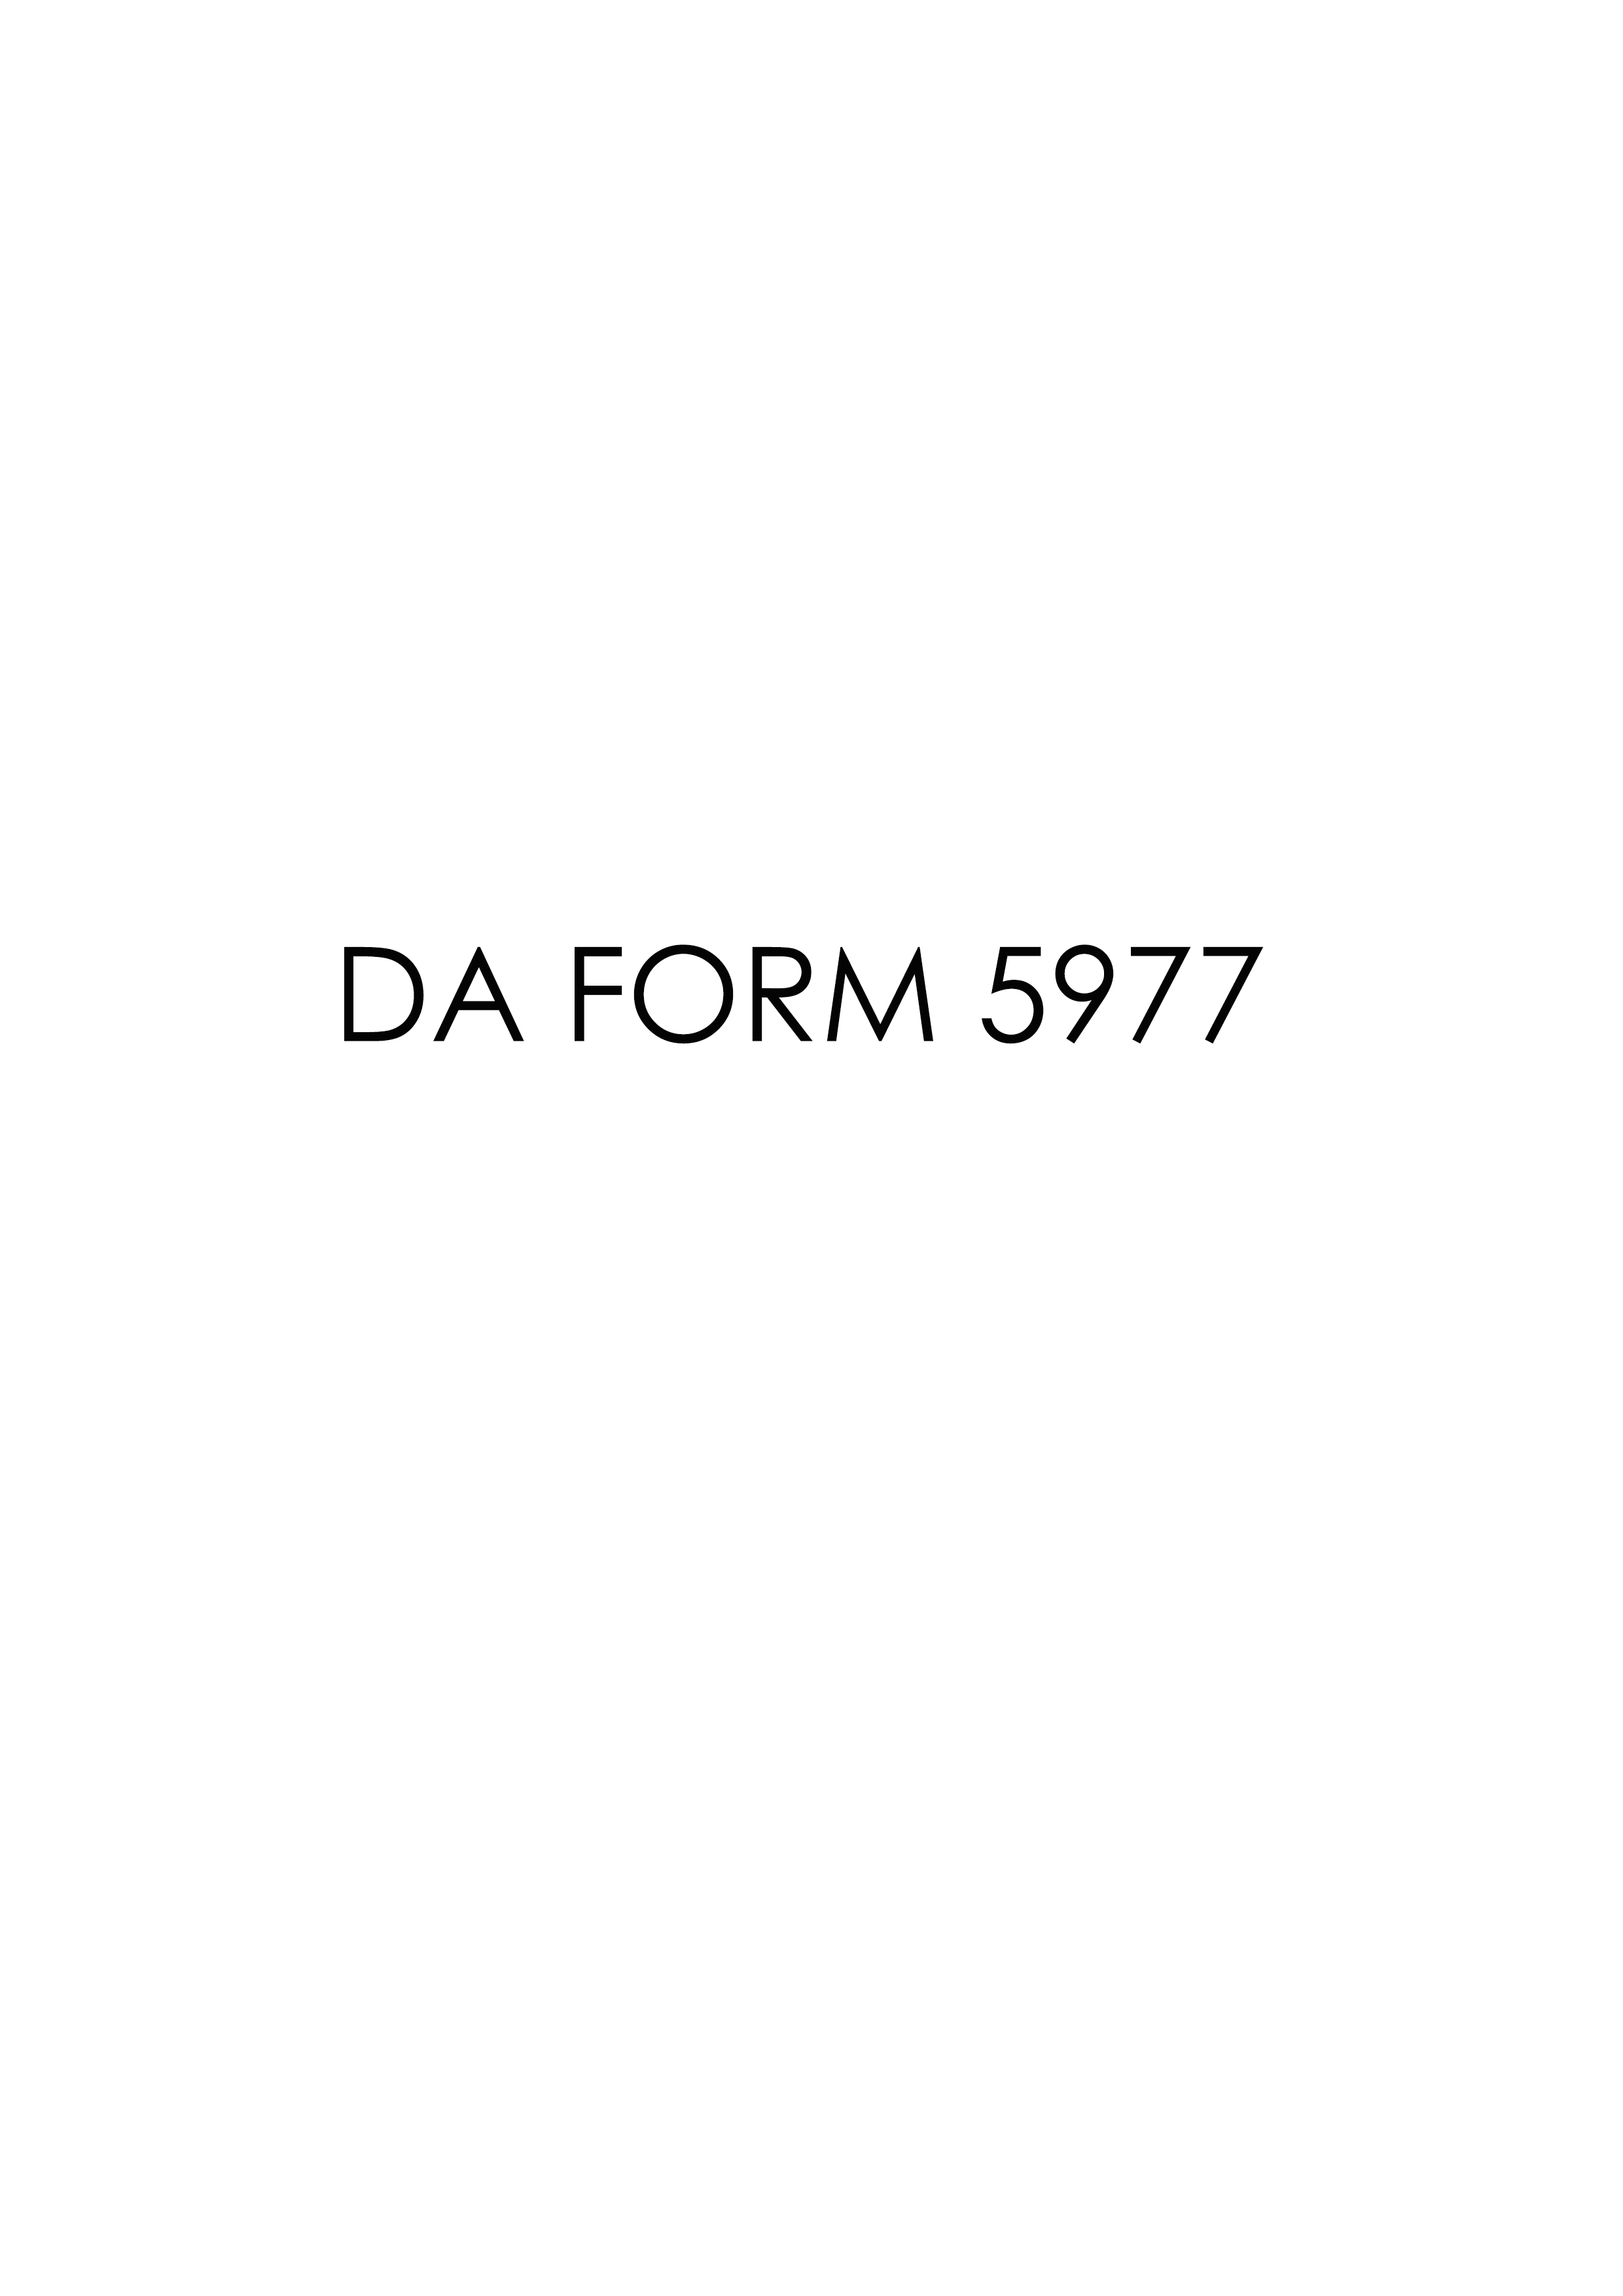 da Form 5977 fillable